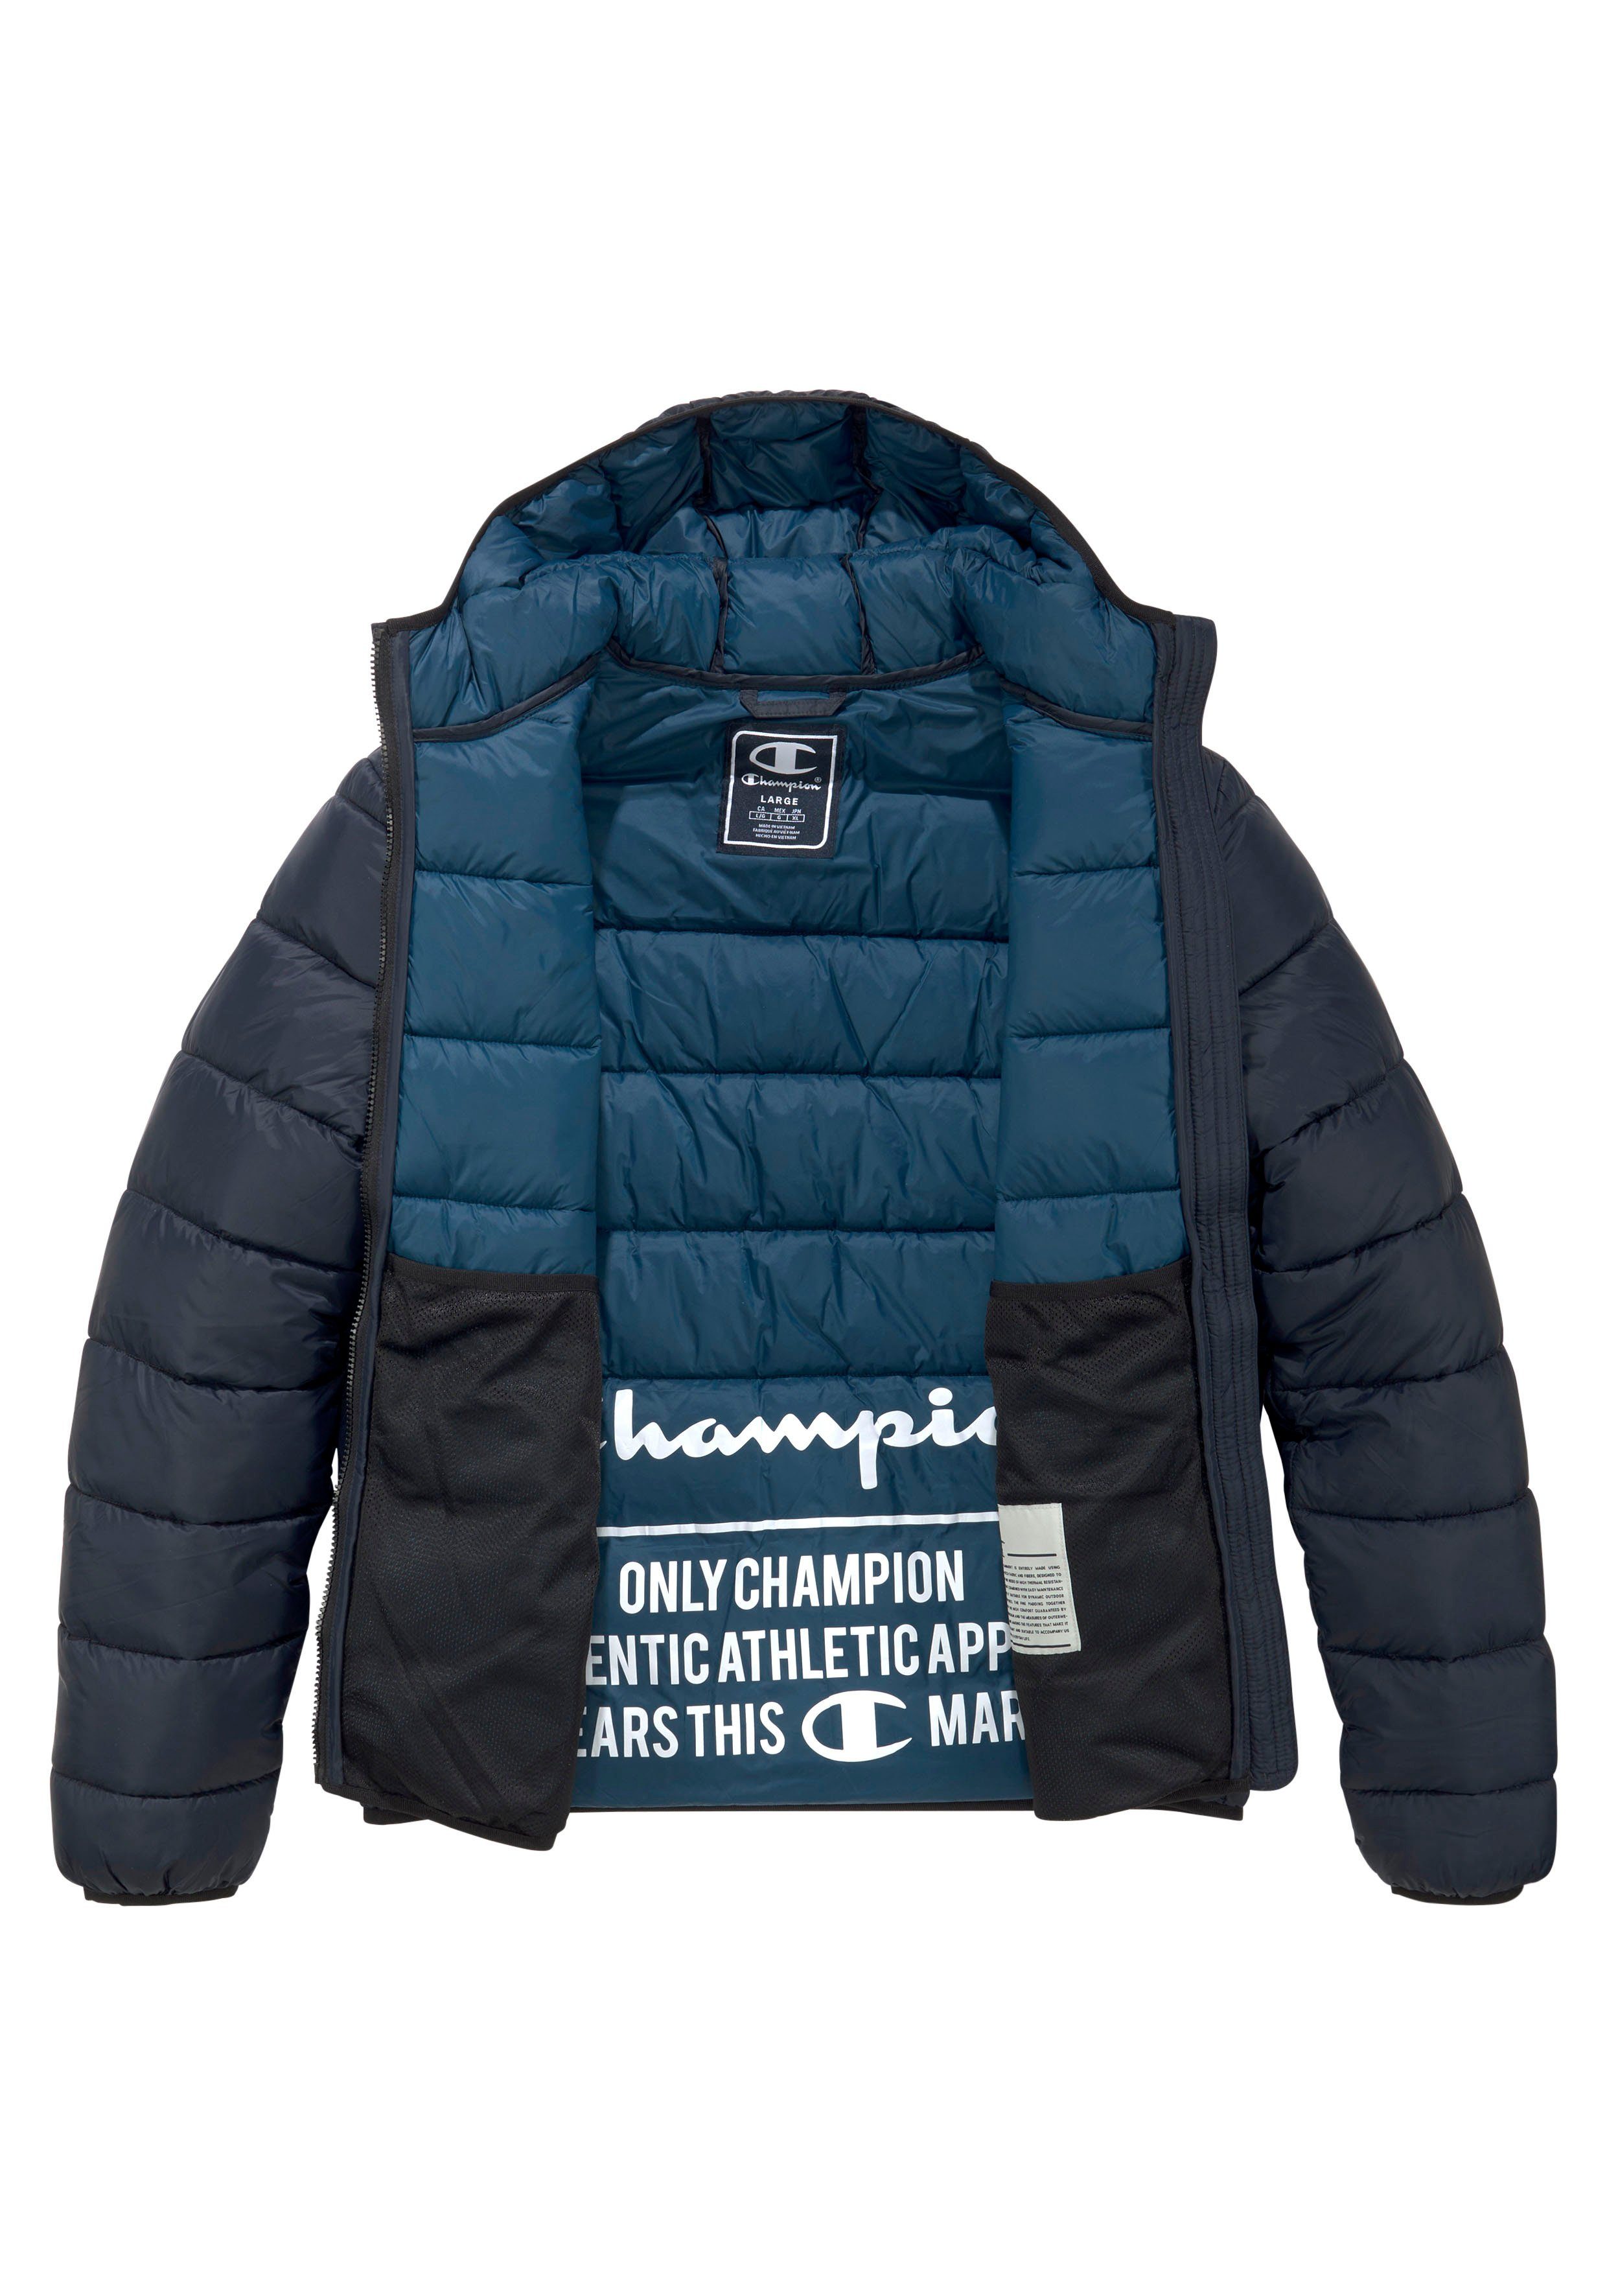 Champion Steppjacke Outdoor Light marine Hooded Jacket